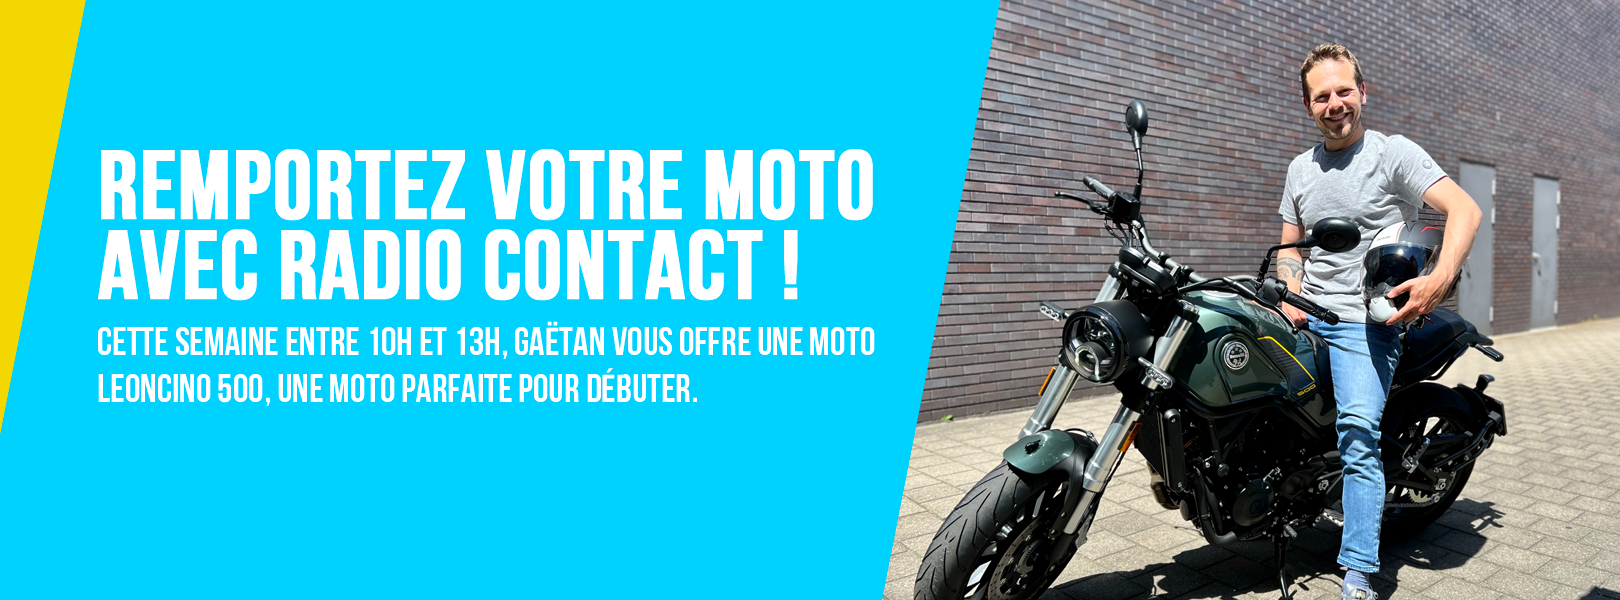 Remportez votre moto avec Radio Contact ! - Radio Contact - Radio